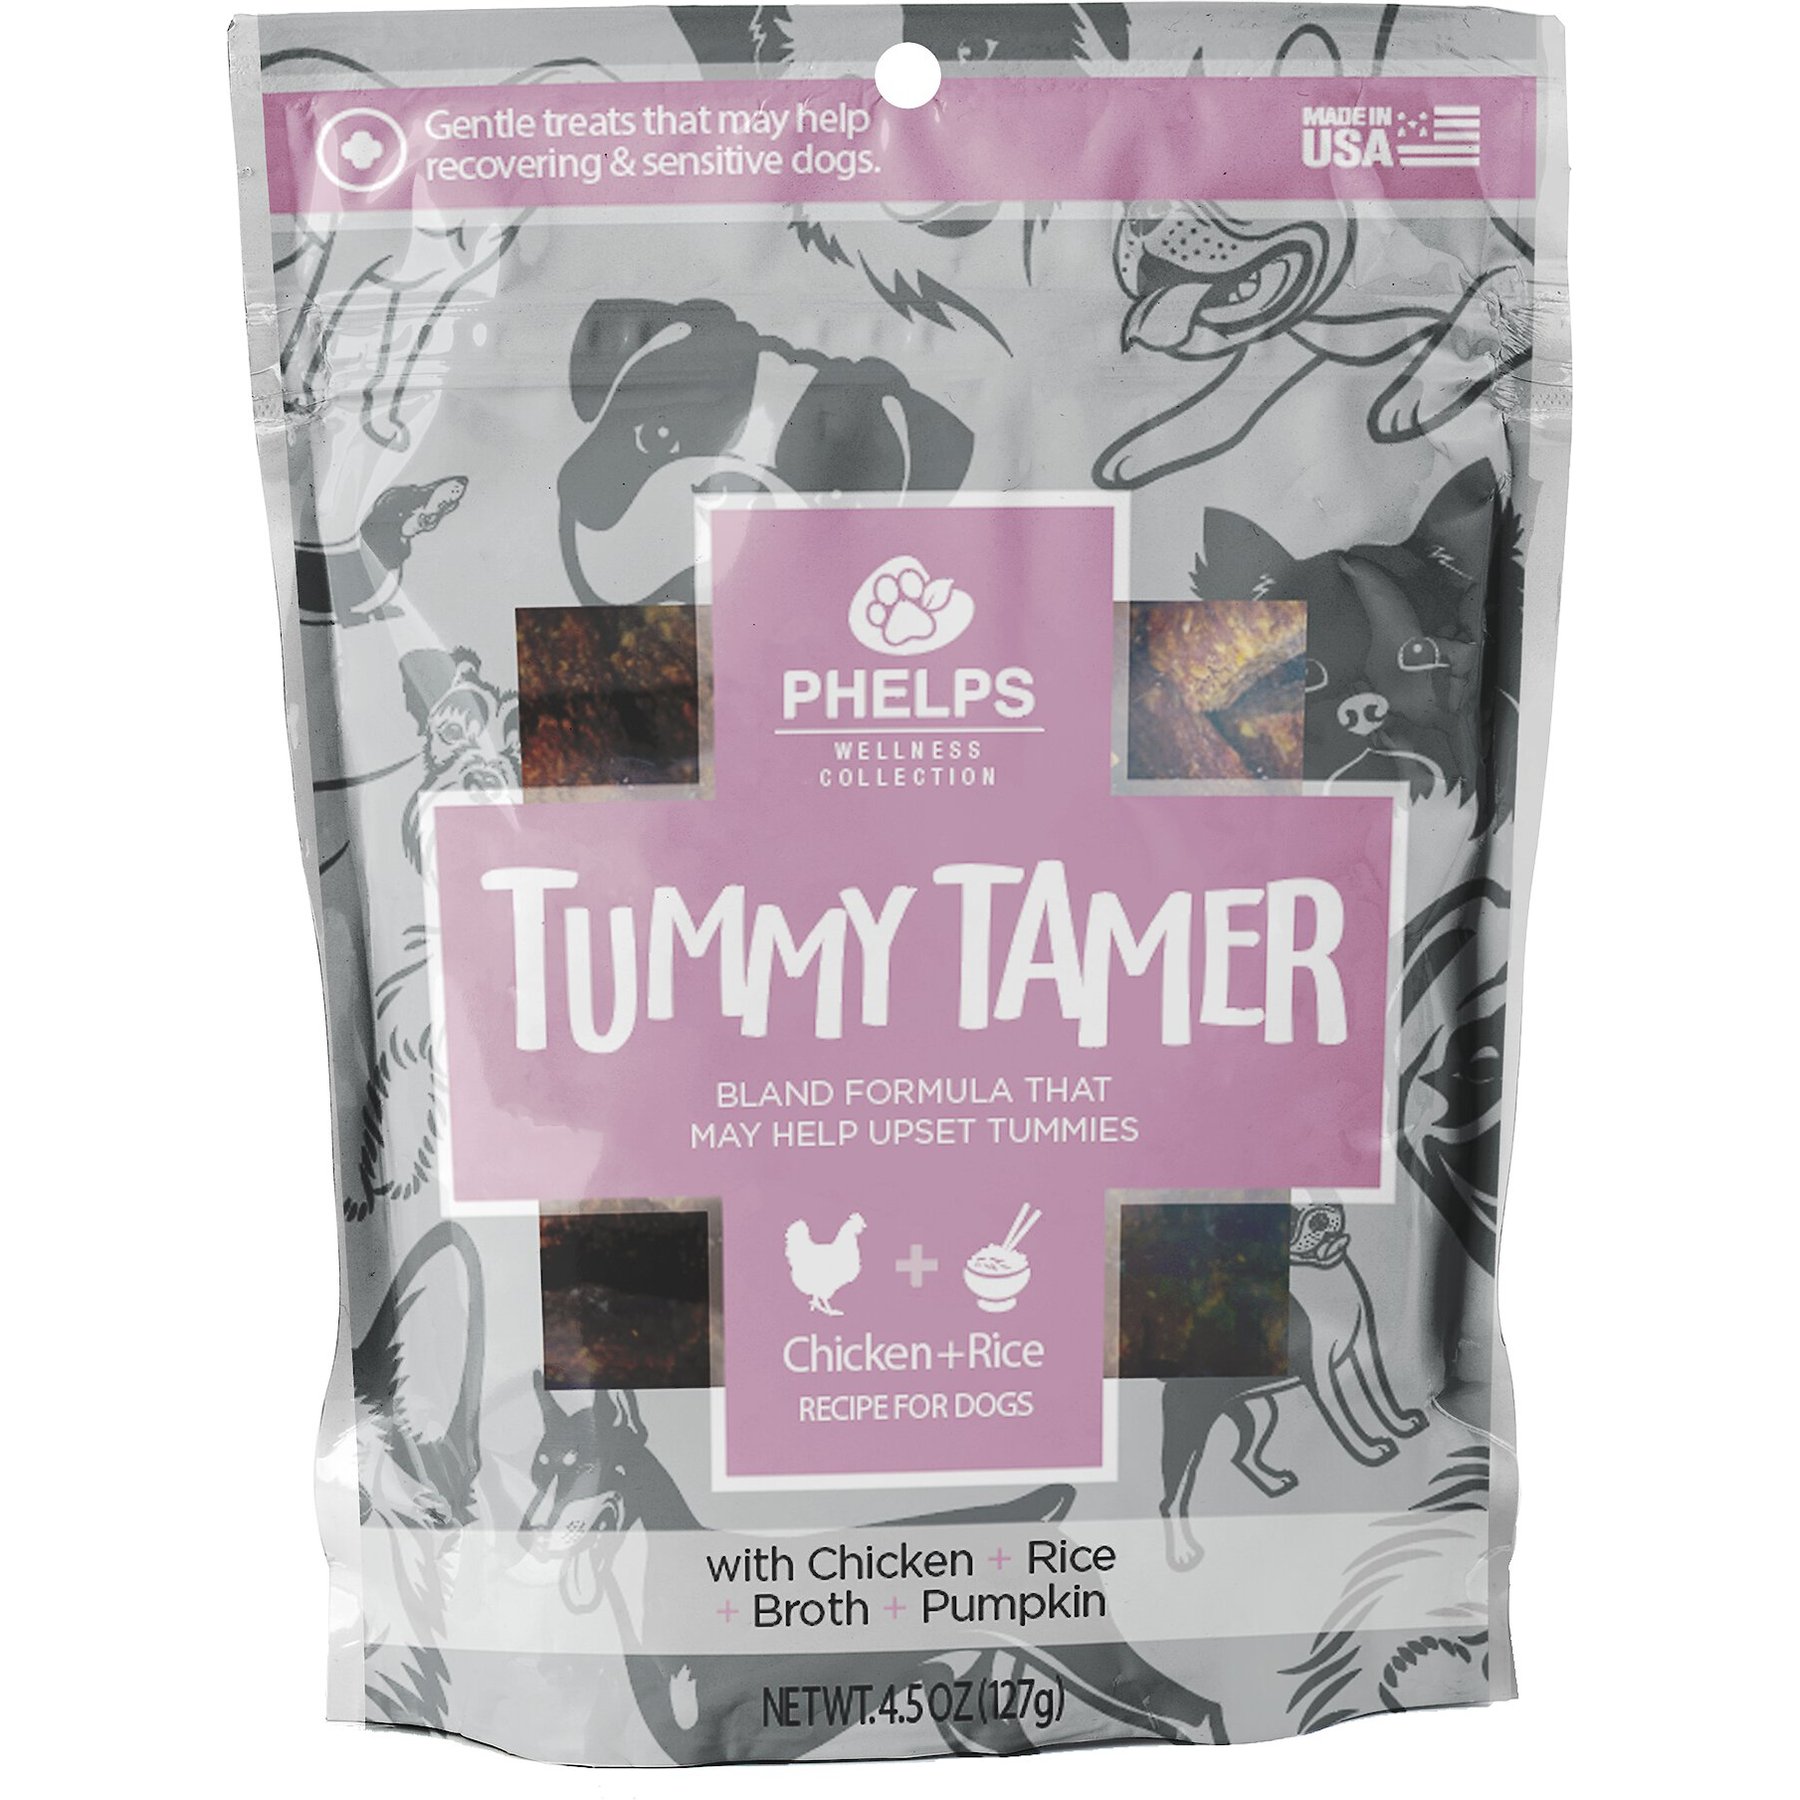 Tummy Tammer